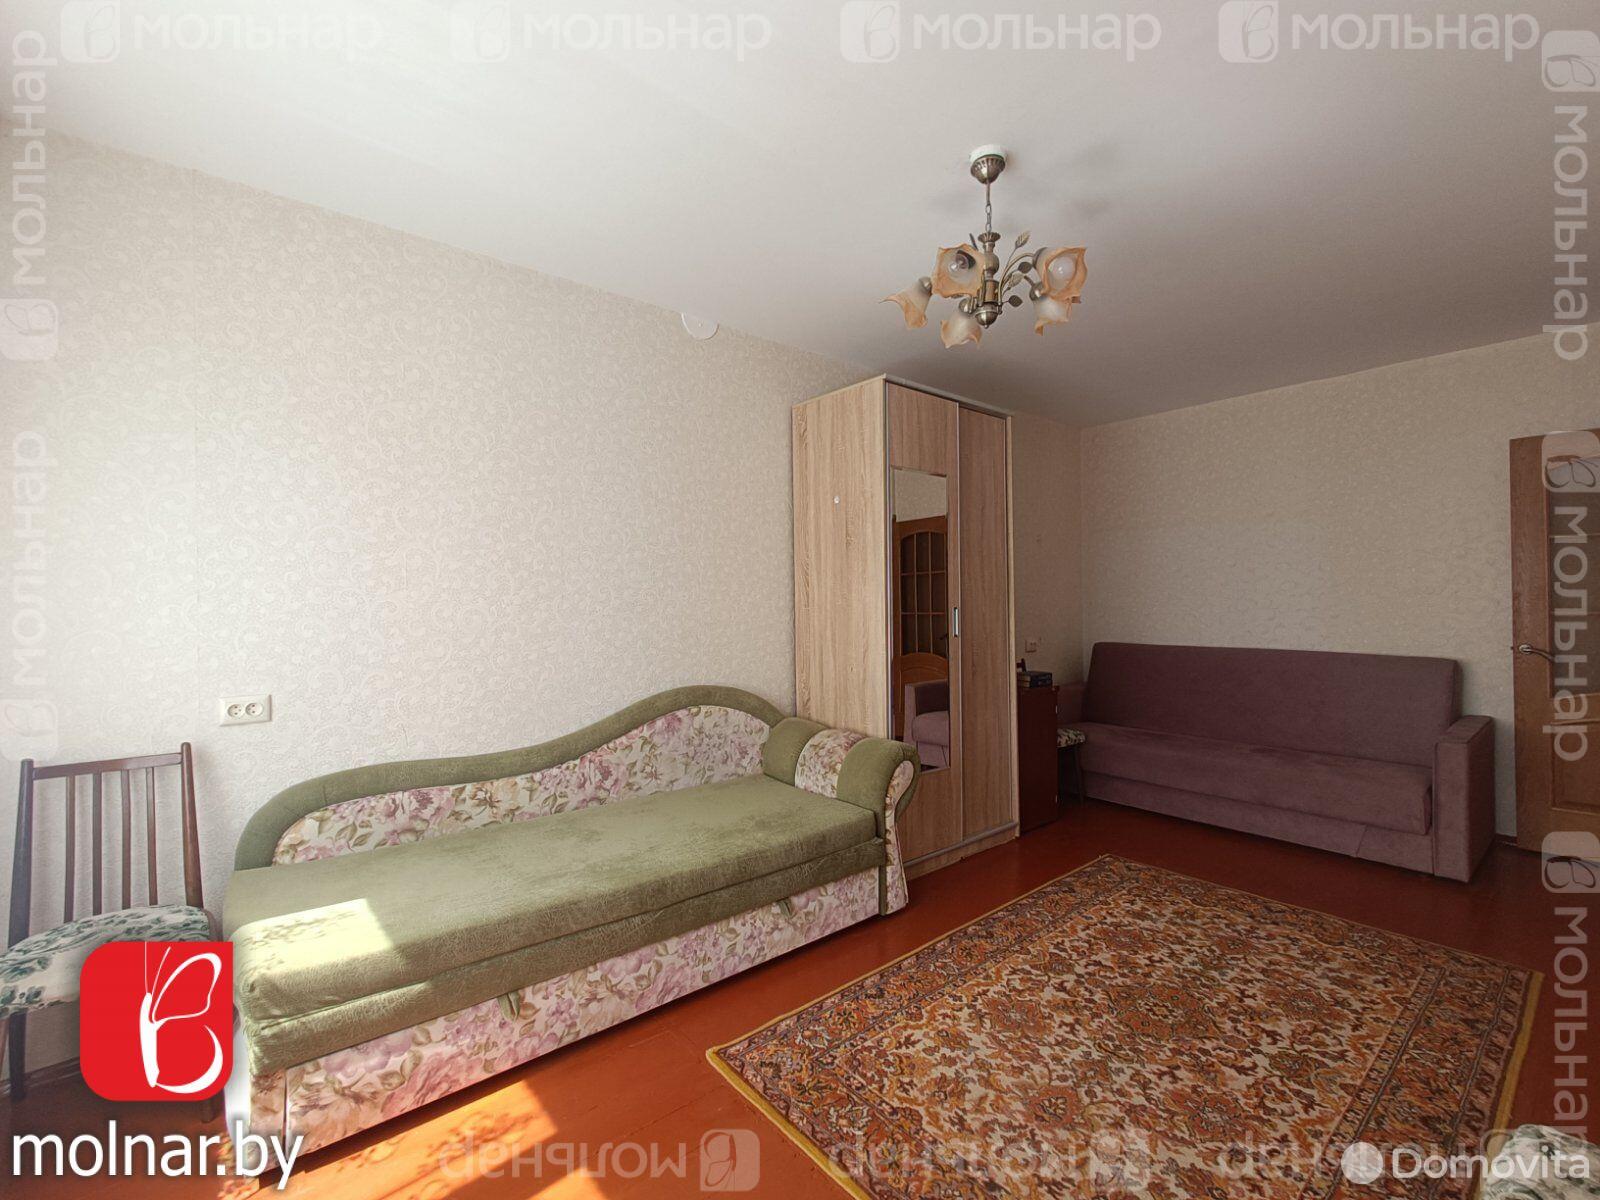 квартира, Минск, ул. Плеханова, д. 115, стоимость продажи 233 385 р.